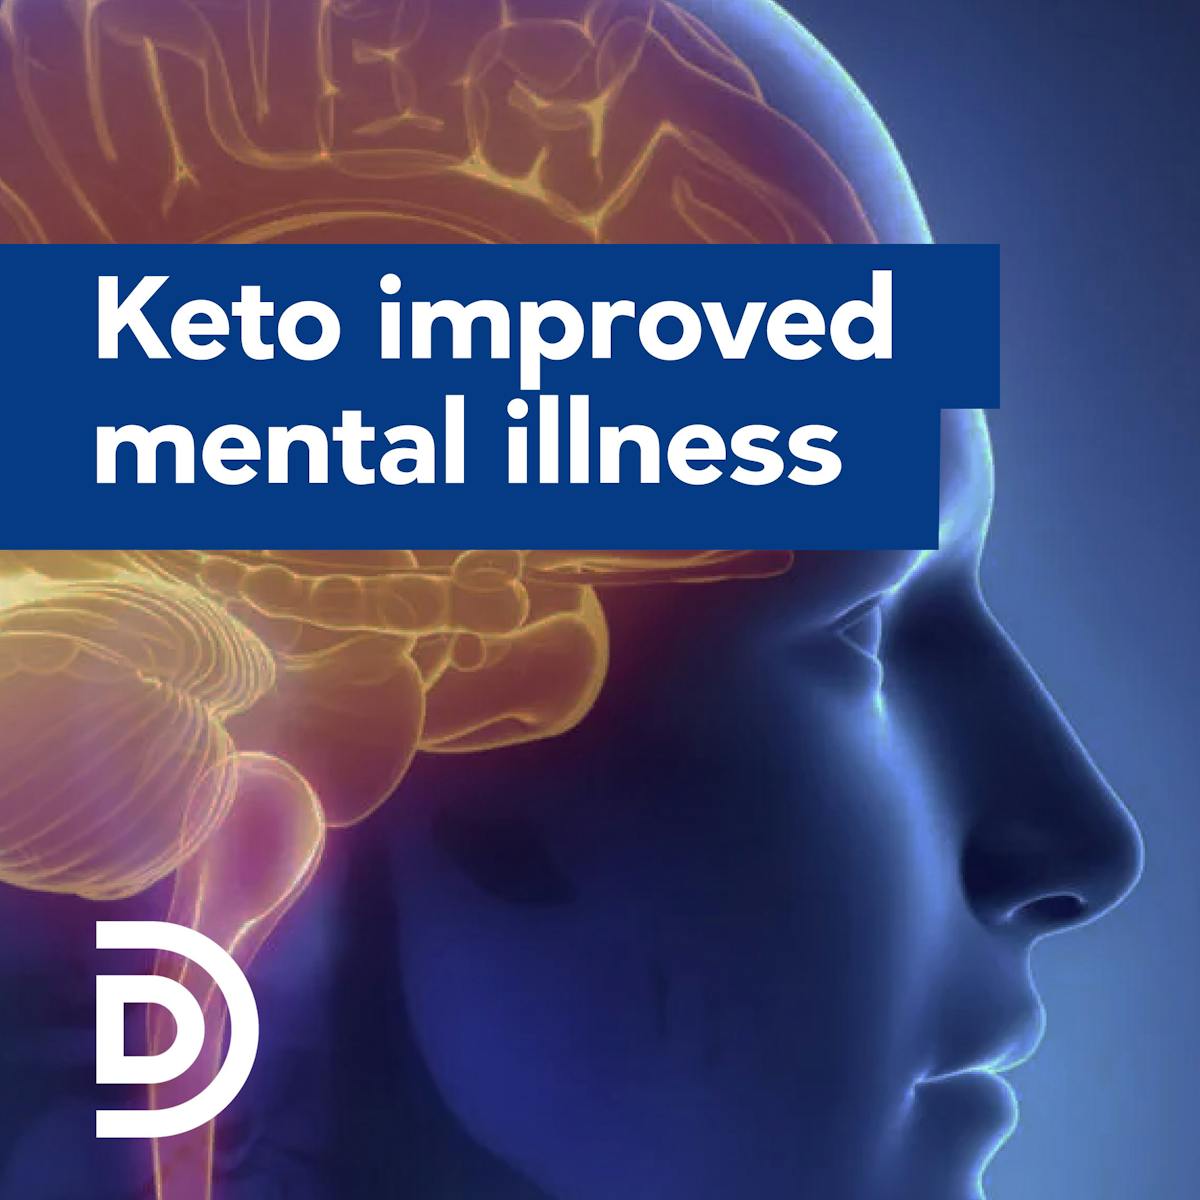 Keto_improved_mental_illness_1x1